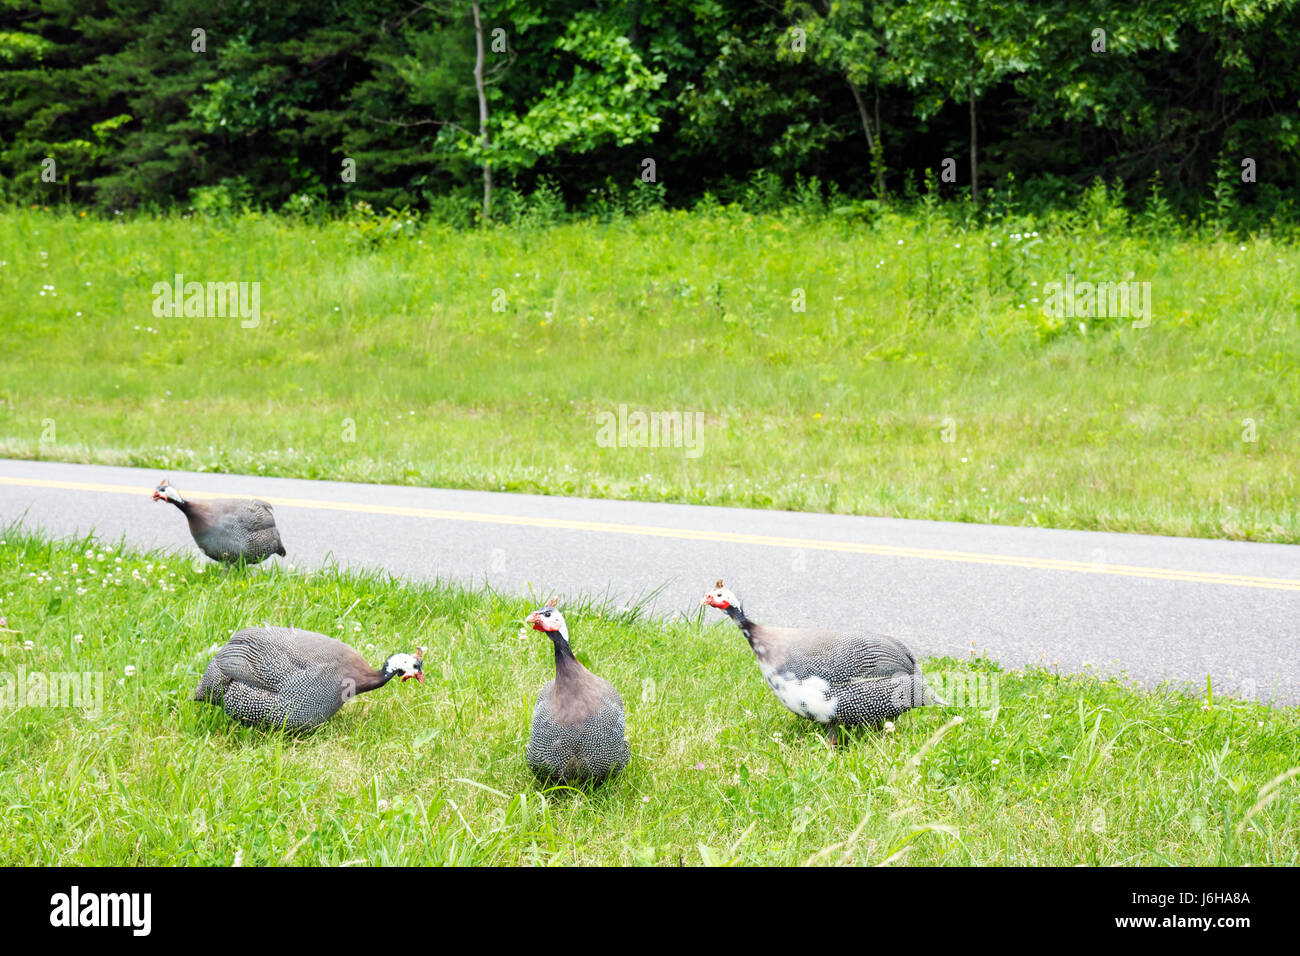 Blue Ridge Parkway Virginia, Montañas Apalaches, cerca de Smart View, aves de guinea, gallina, aves, animales, carretera, VA090621033 Foto de stock